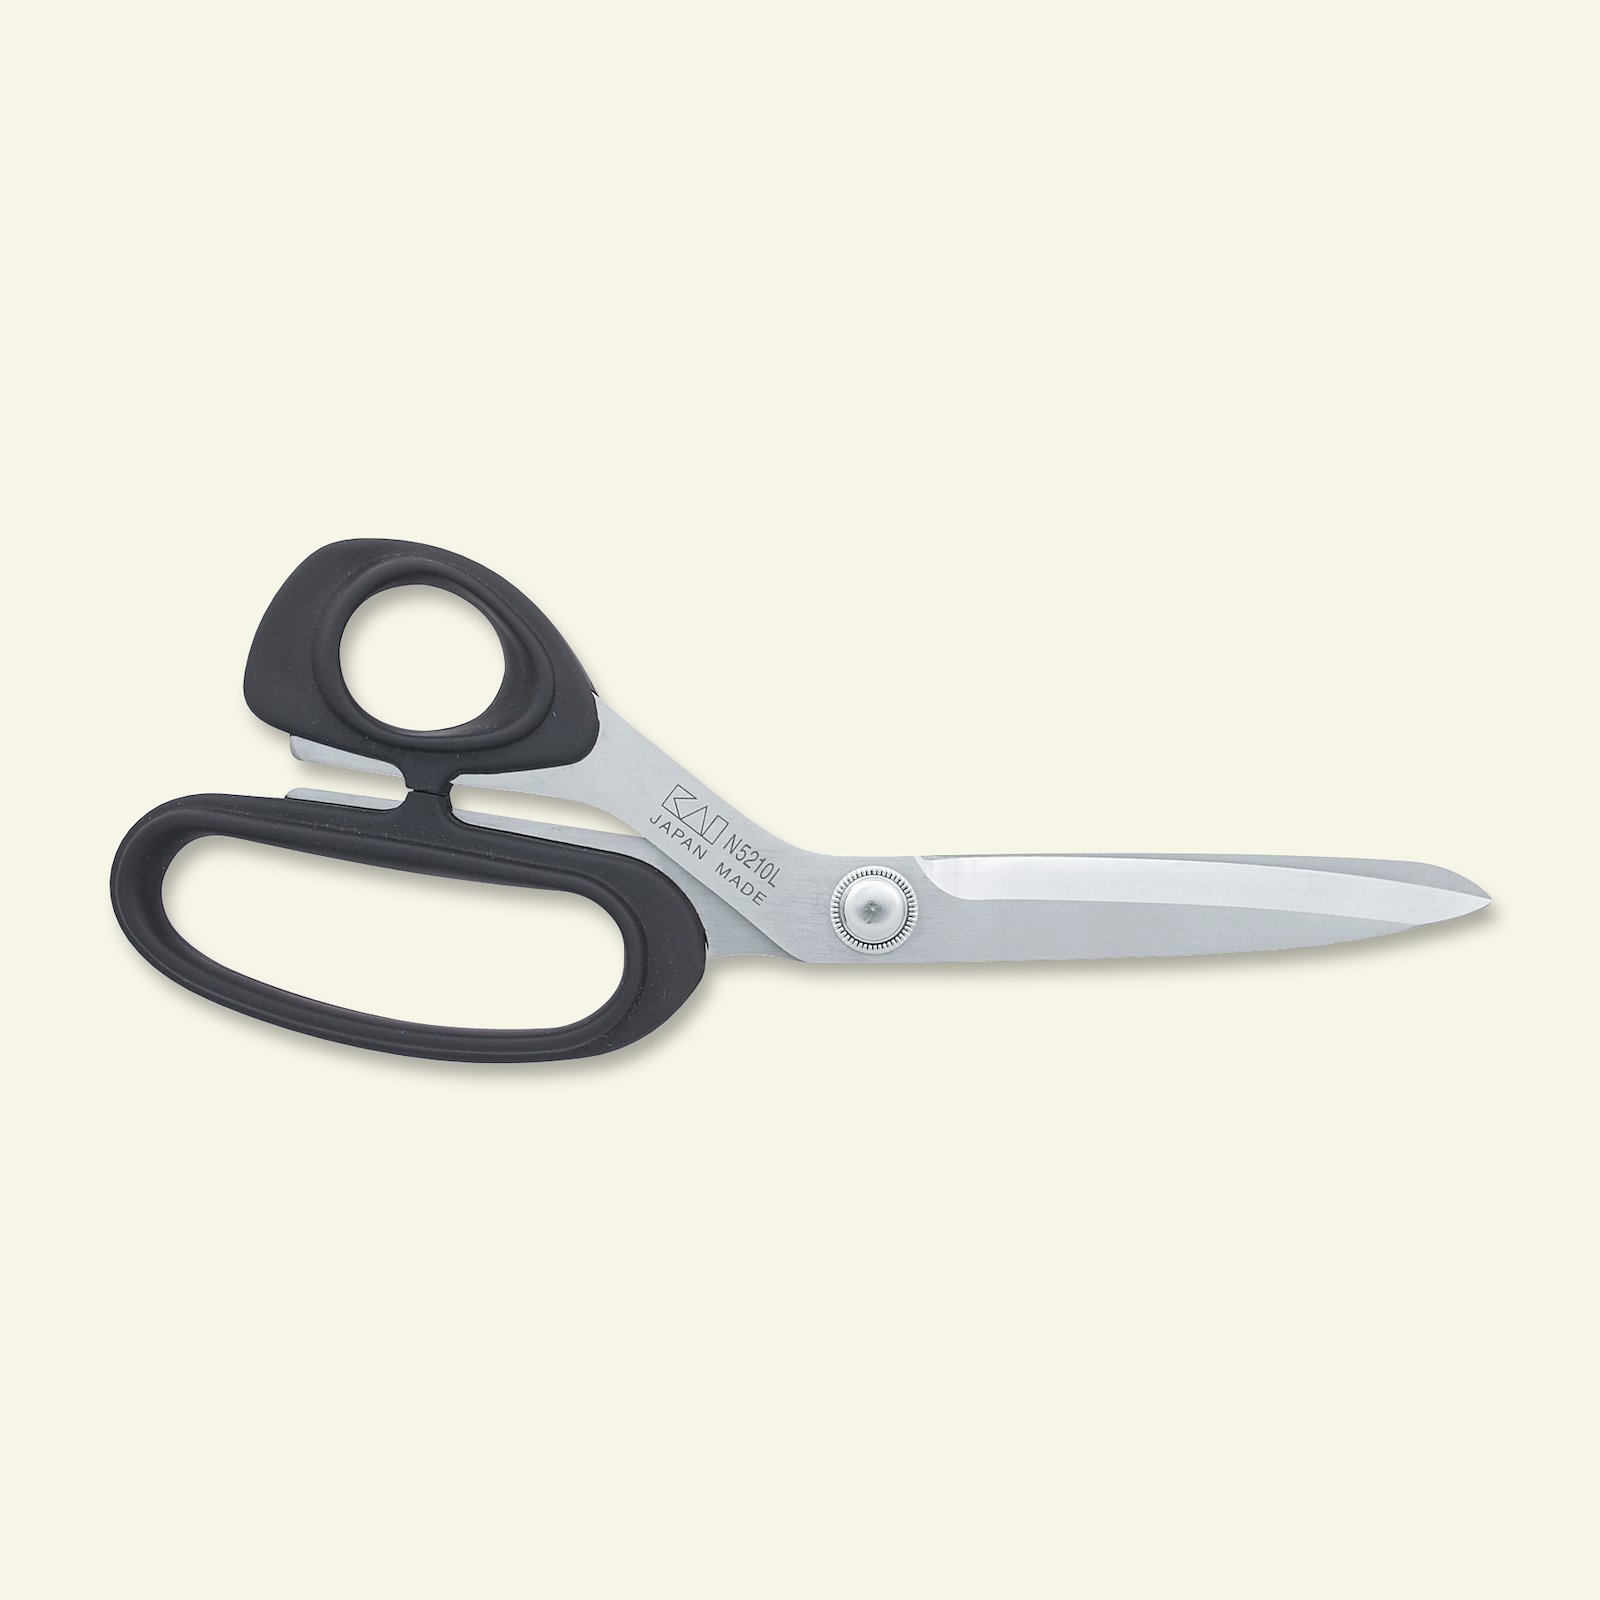 KAI universal scissor left hand 21cm 39301_pack